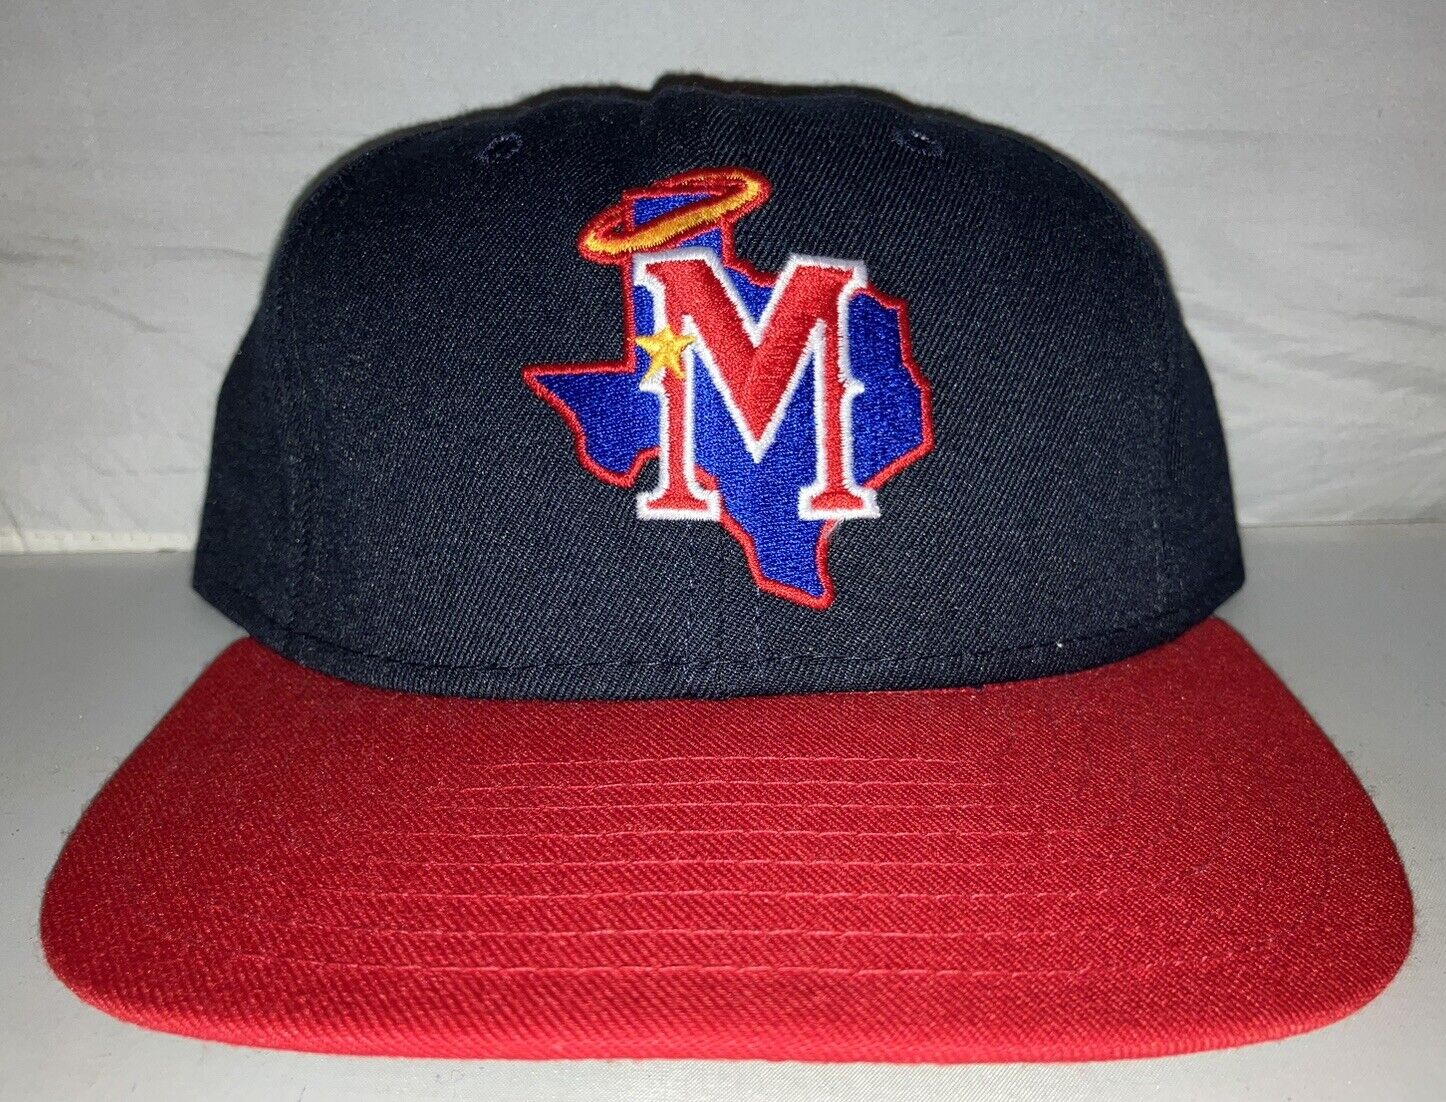 Vtg Midland Angels Delong fitted hat cap size 7 1/4 MiLB Baseball Minor League